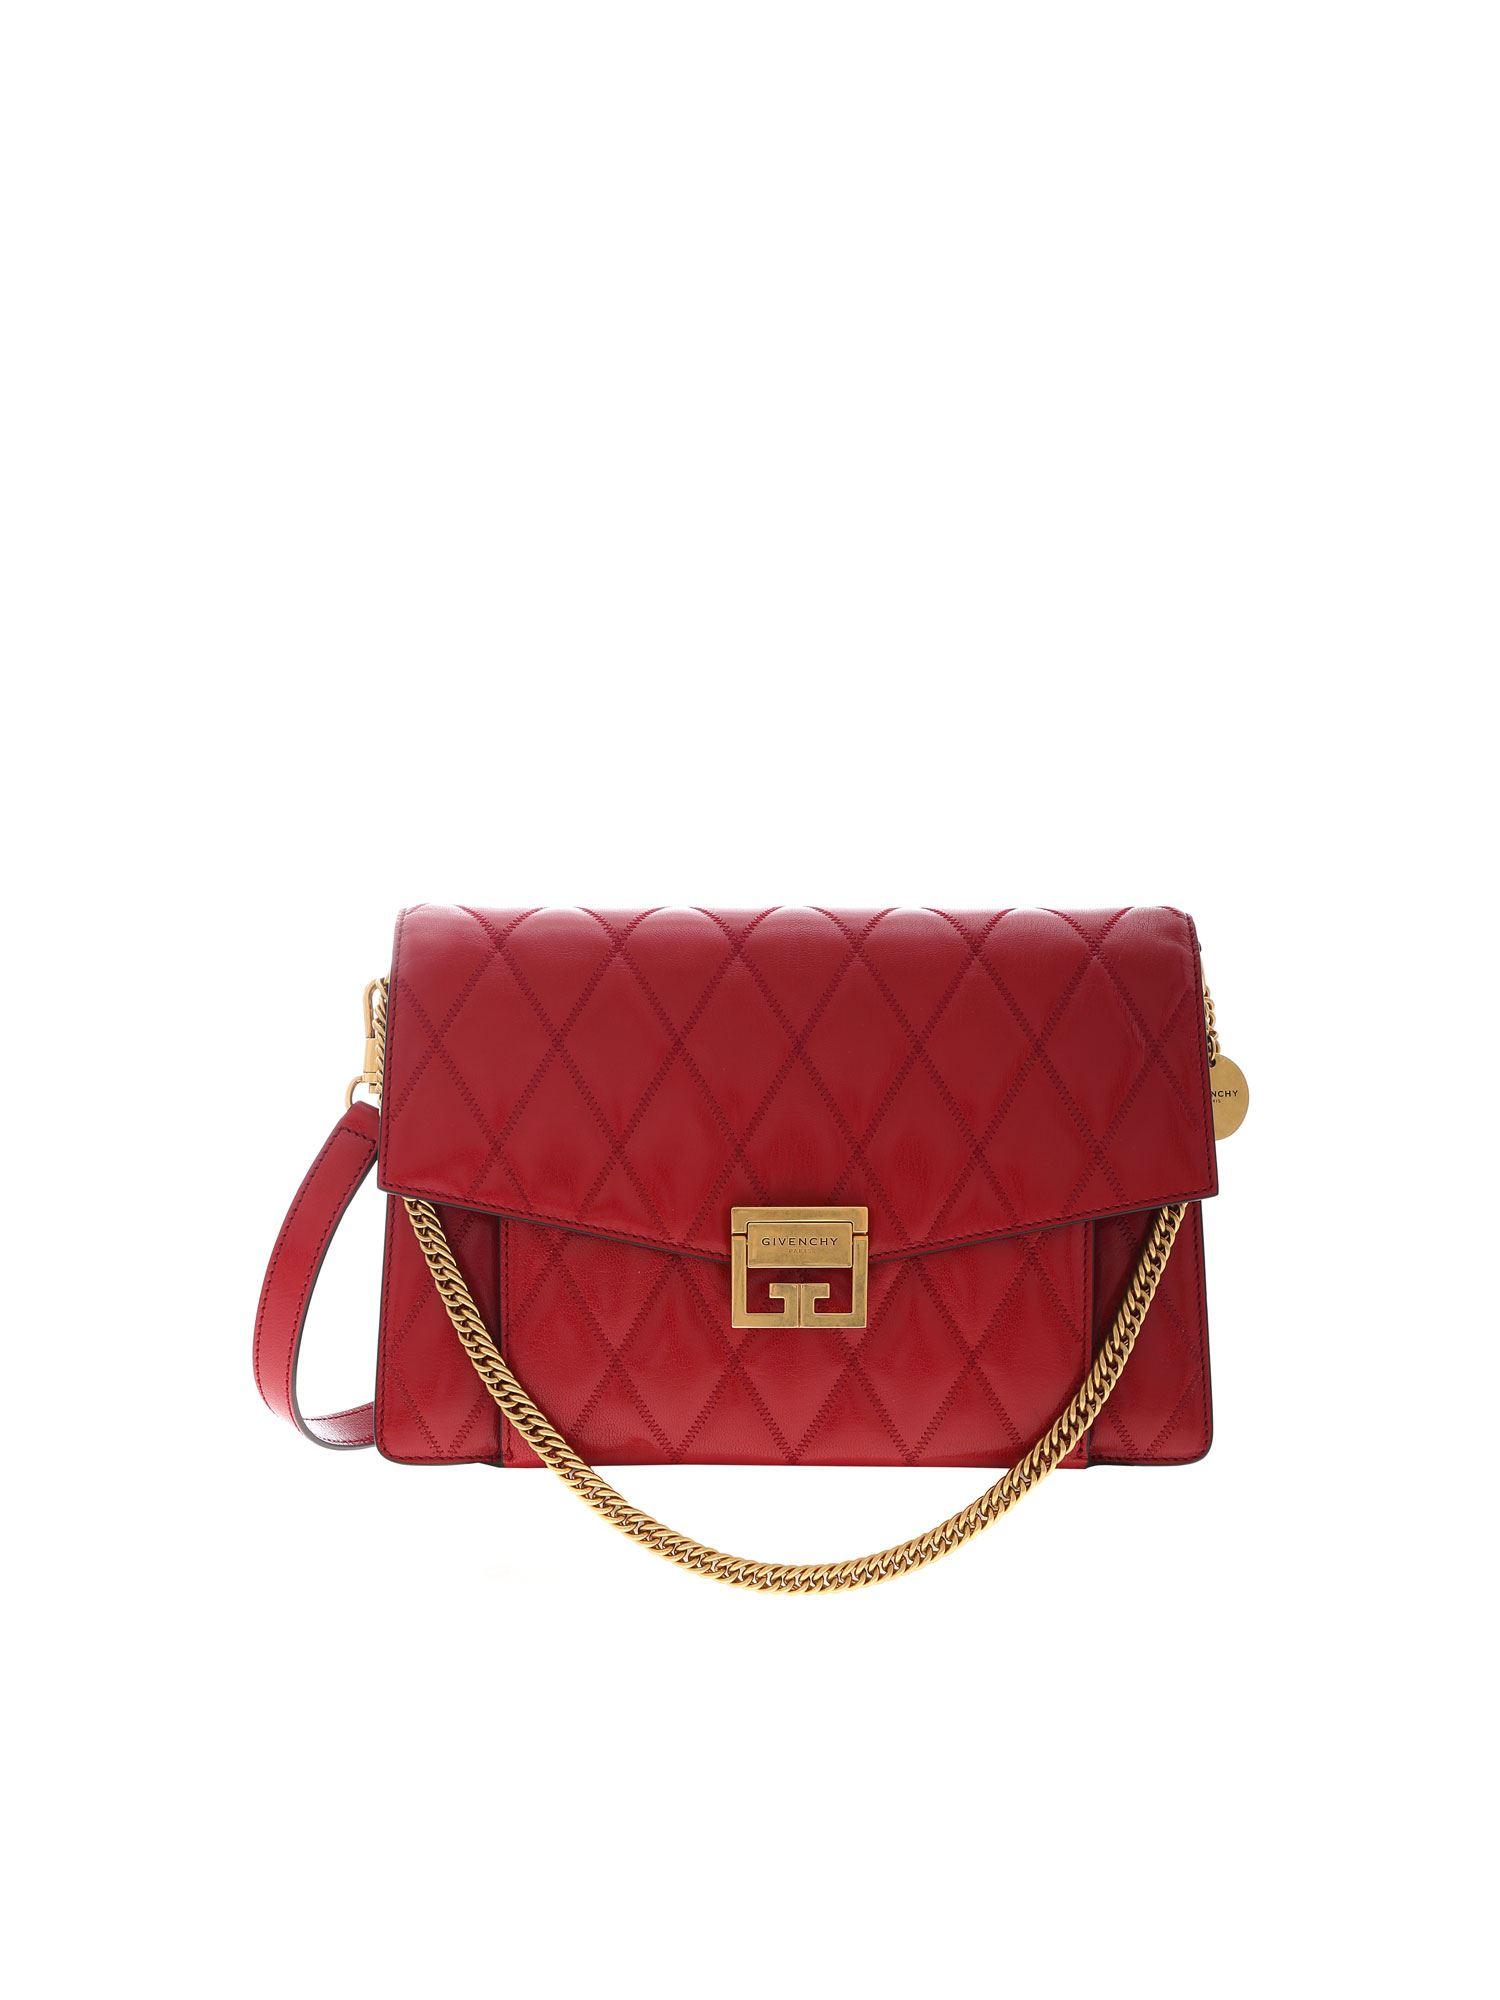 Givenchy Medium Gv3 Handbag In Red in Red - Lyst